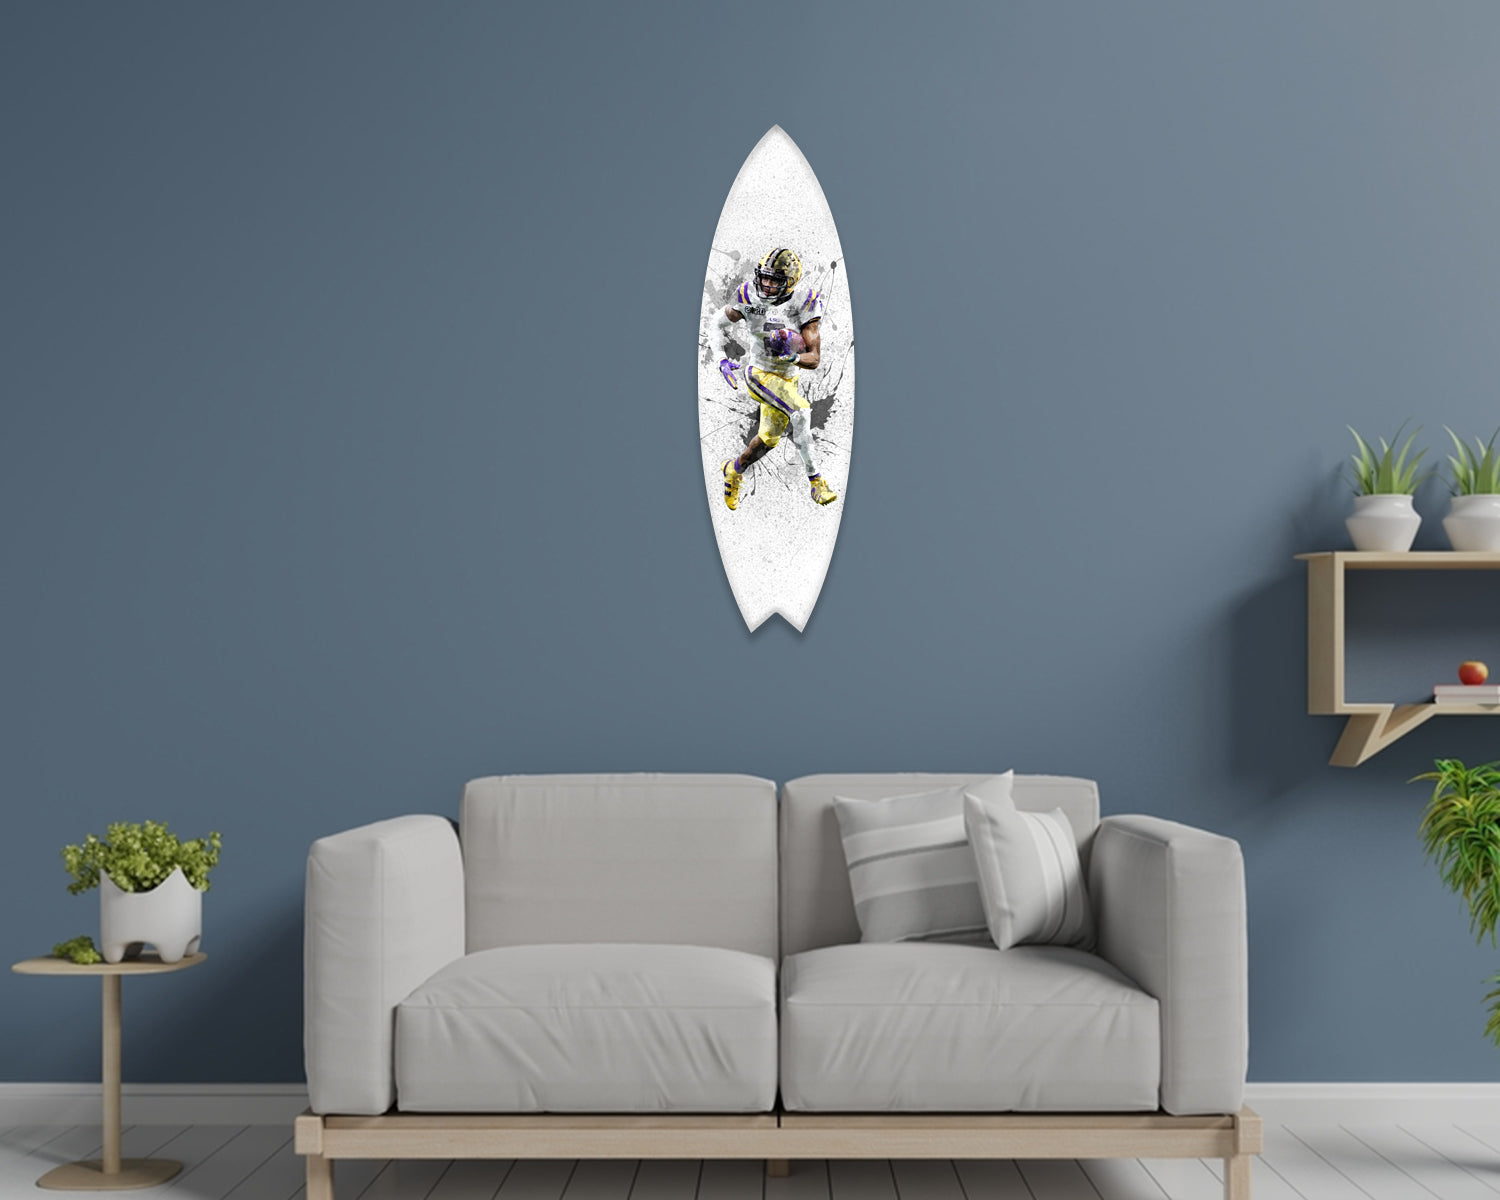 Justin Jefferson Acrylic Surfboard Wall Art 